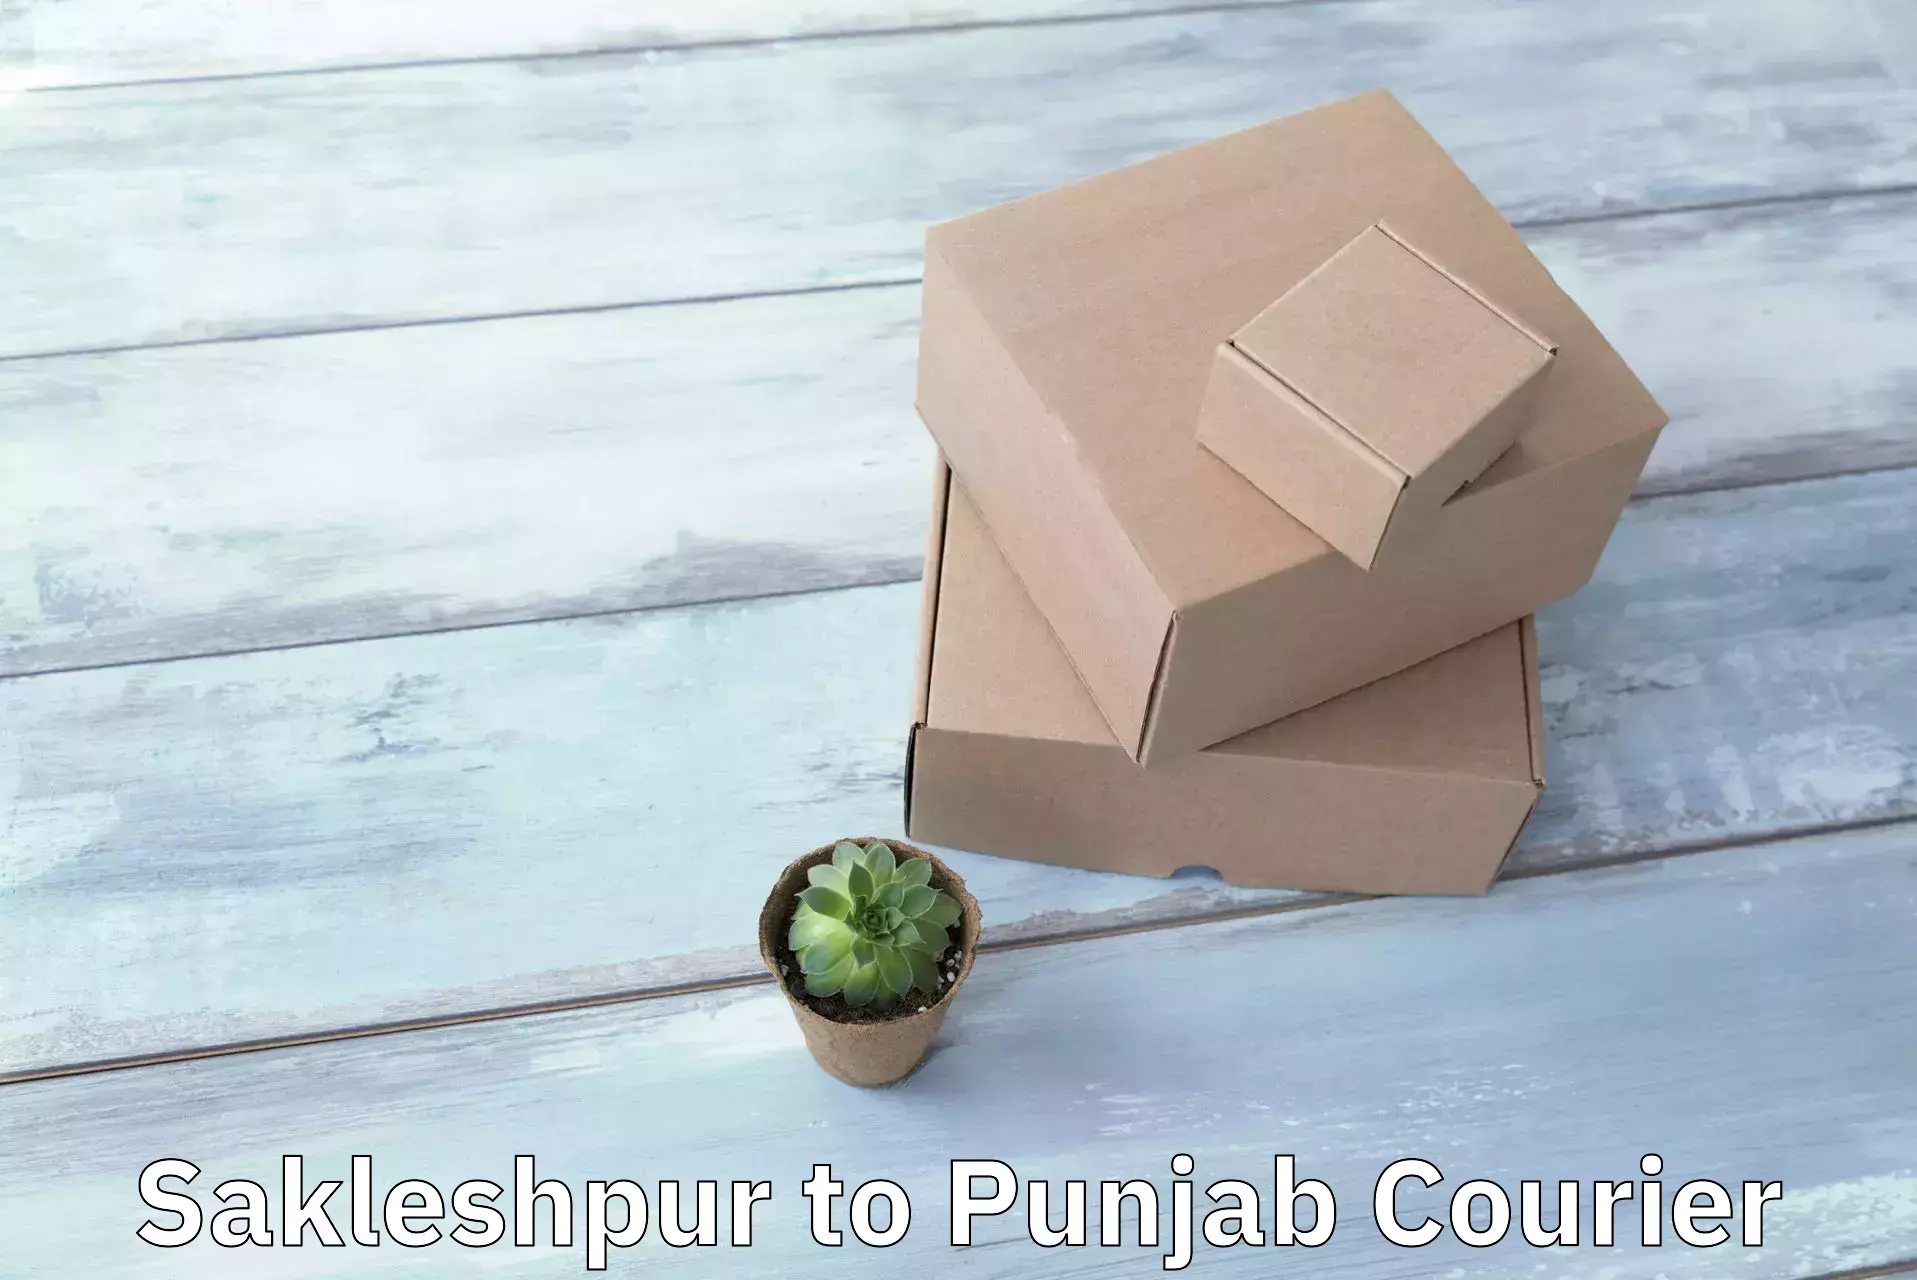 Nationwide delivery network Sakleshpur to Punjab